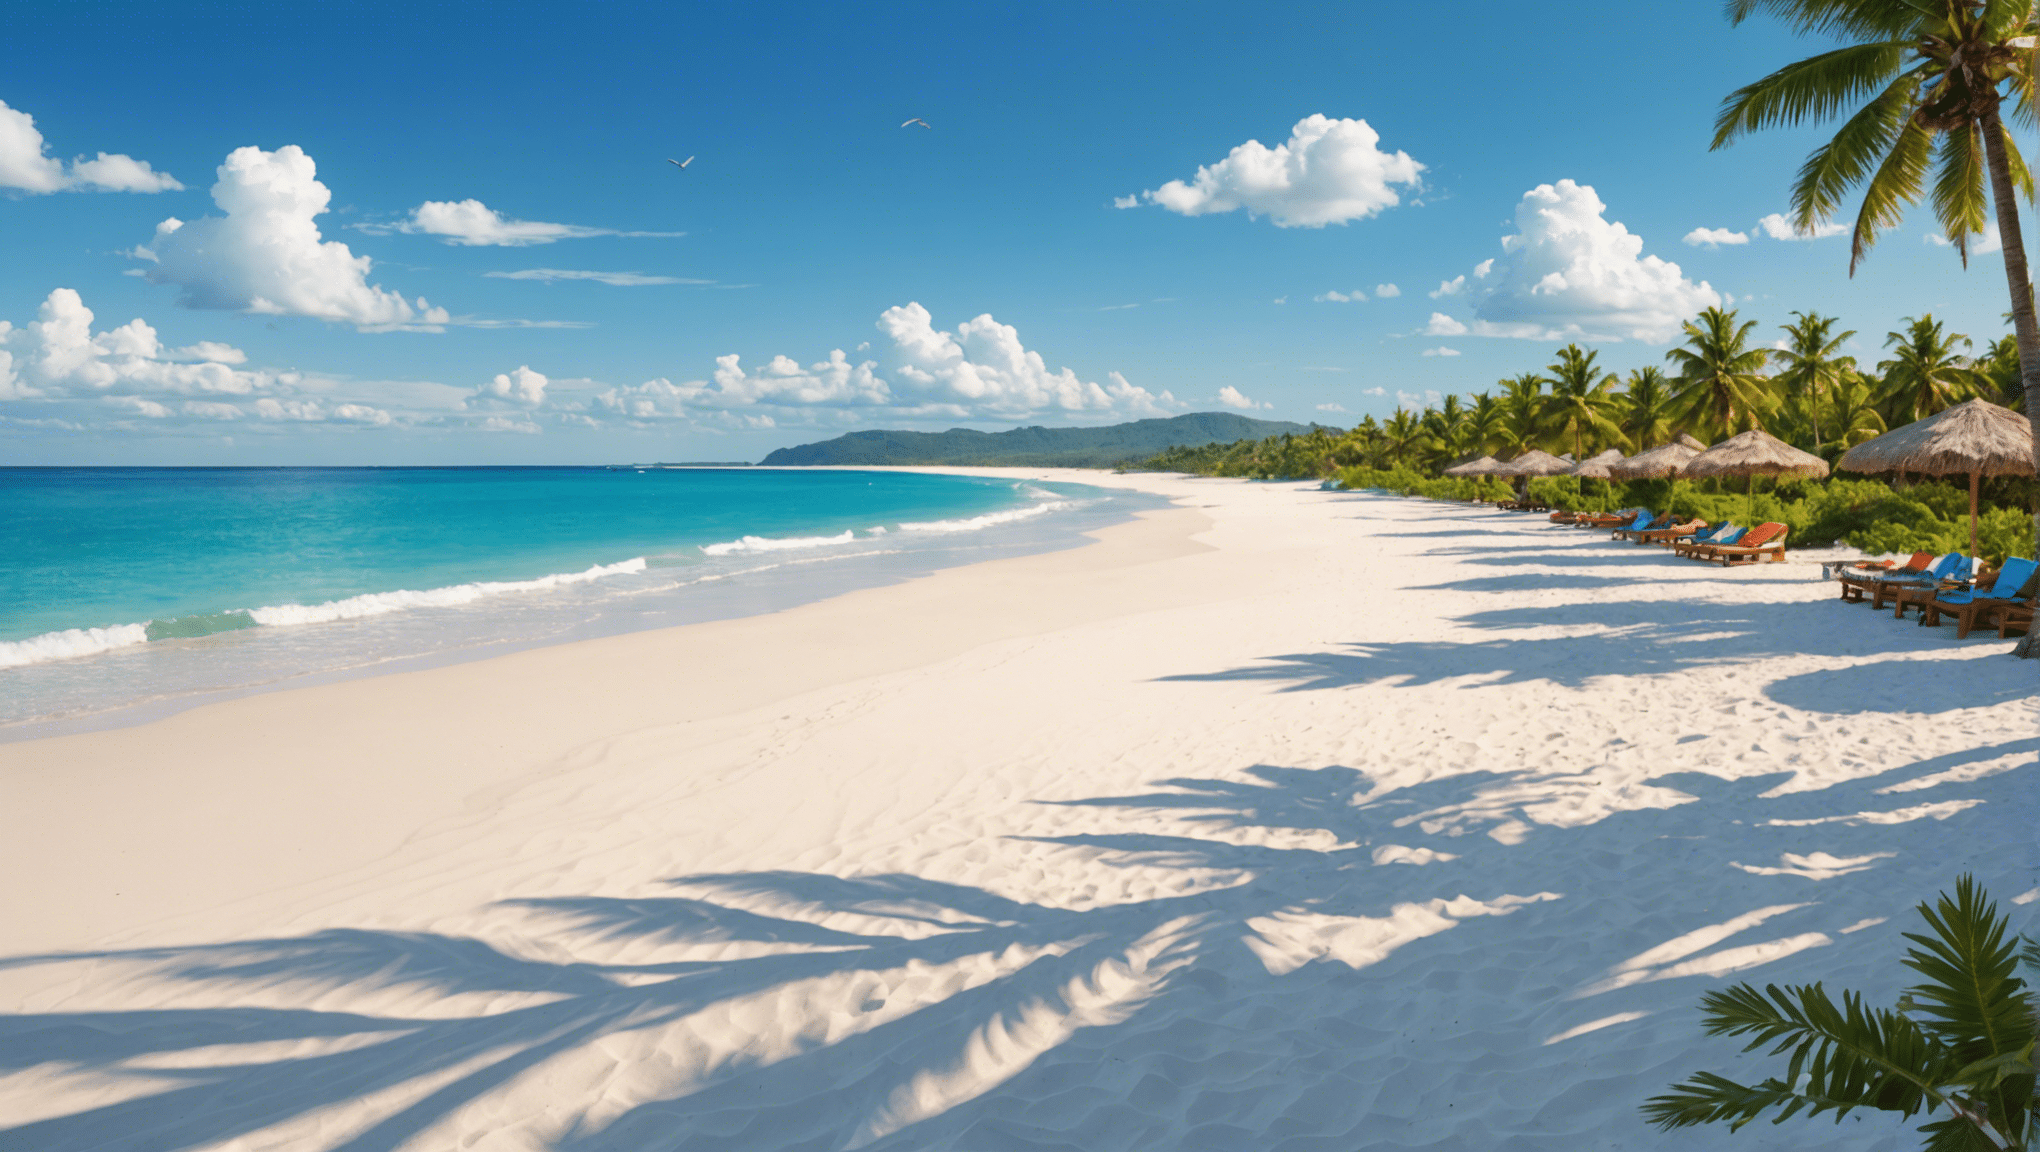 descubra as mais belas praias de areia branca do mundo e deixe-se encantar pela sua beleza e serenidade.